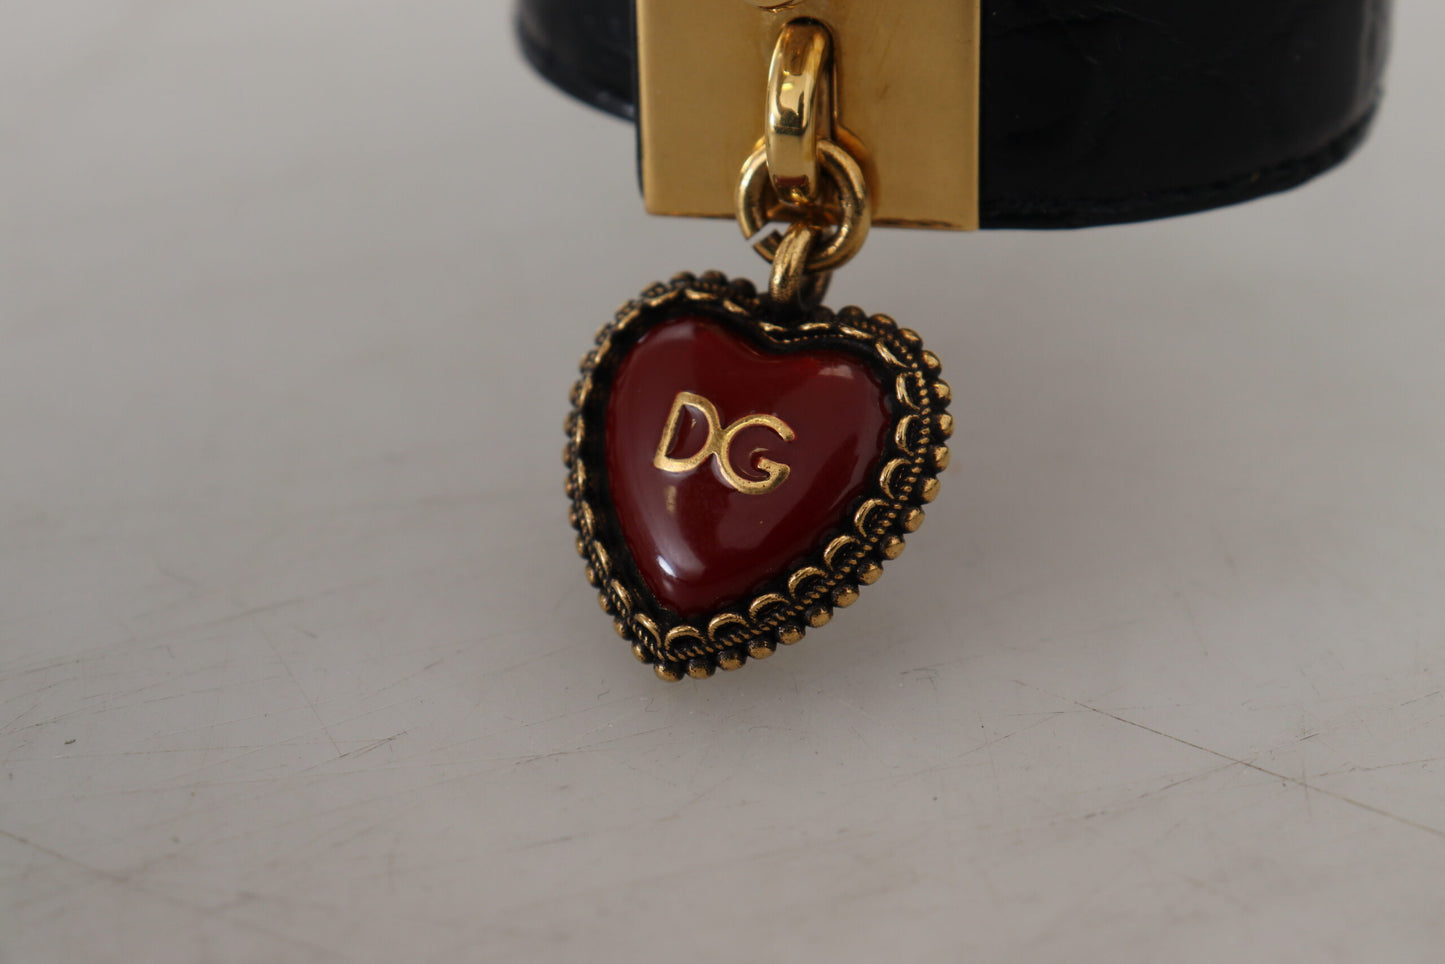 Dolce &amp; Gabbana Elegantes Armband aus schwarzem Leder mit Golddetail